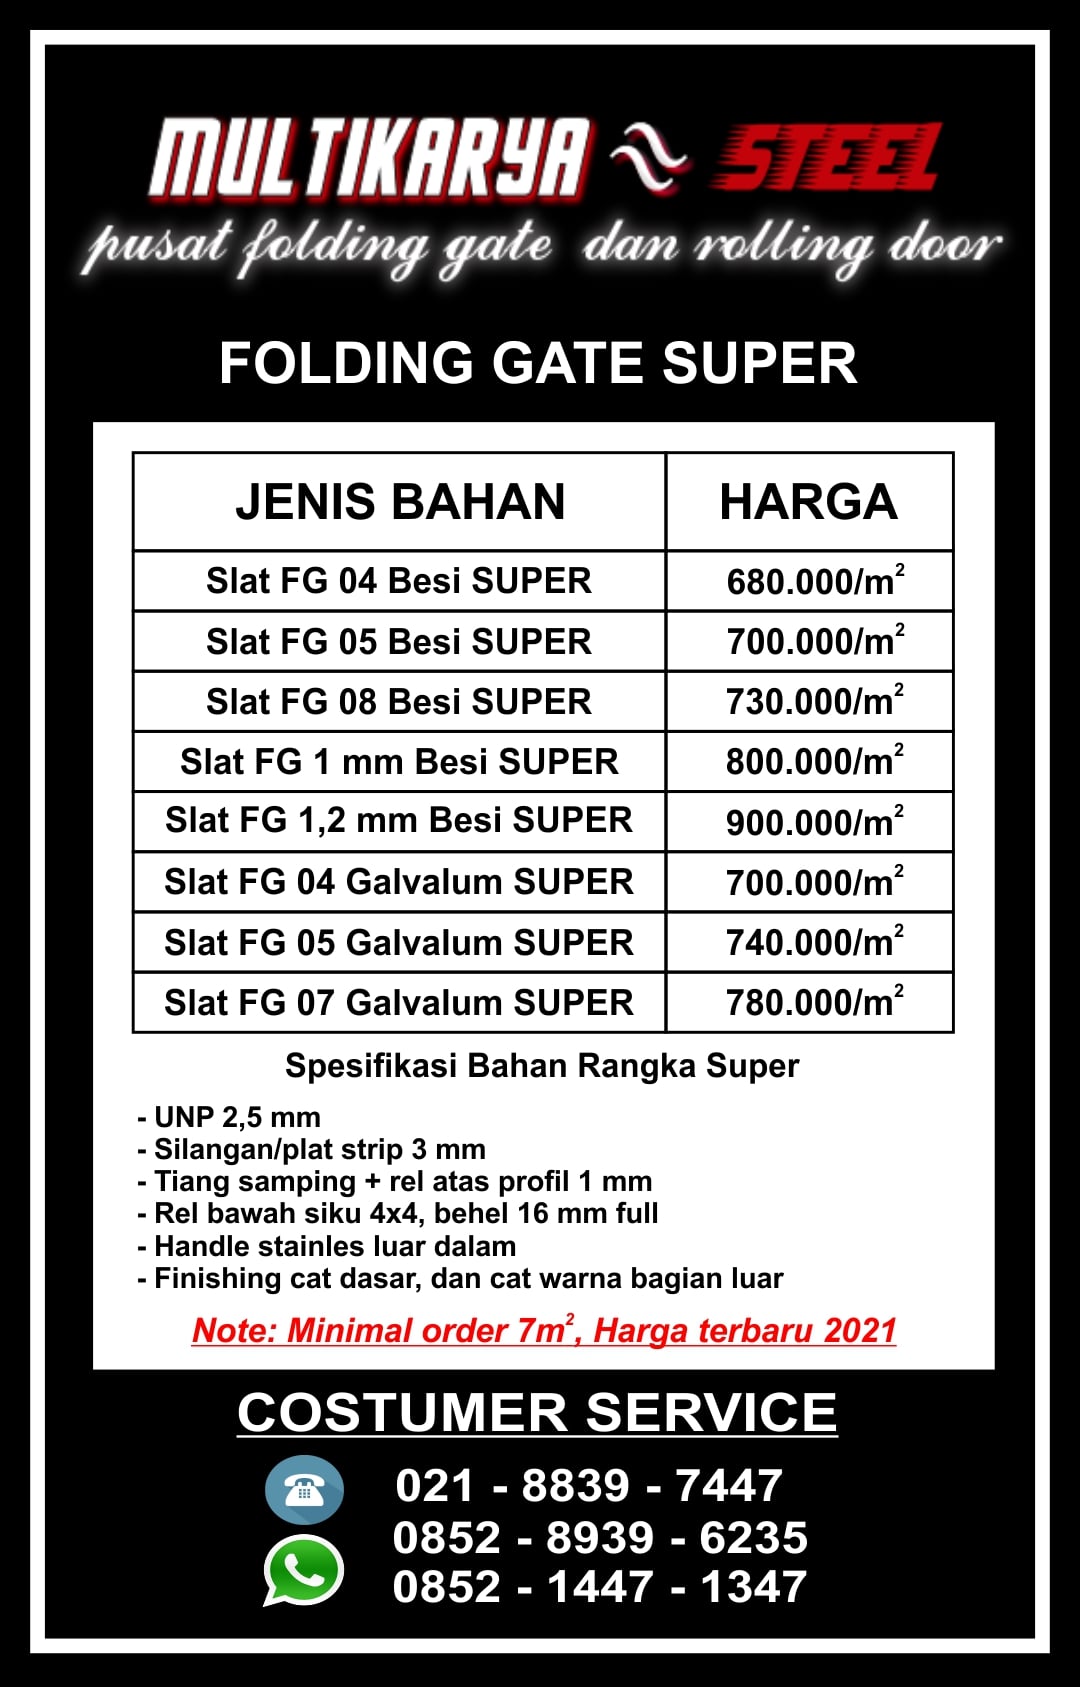 Daftar Harga Folding Gate Super Multi Karya Steel